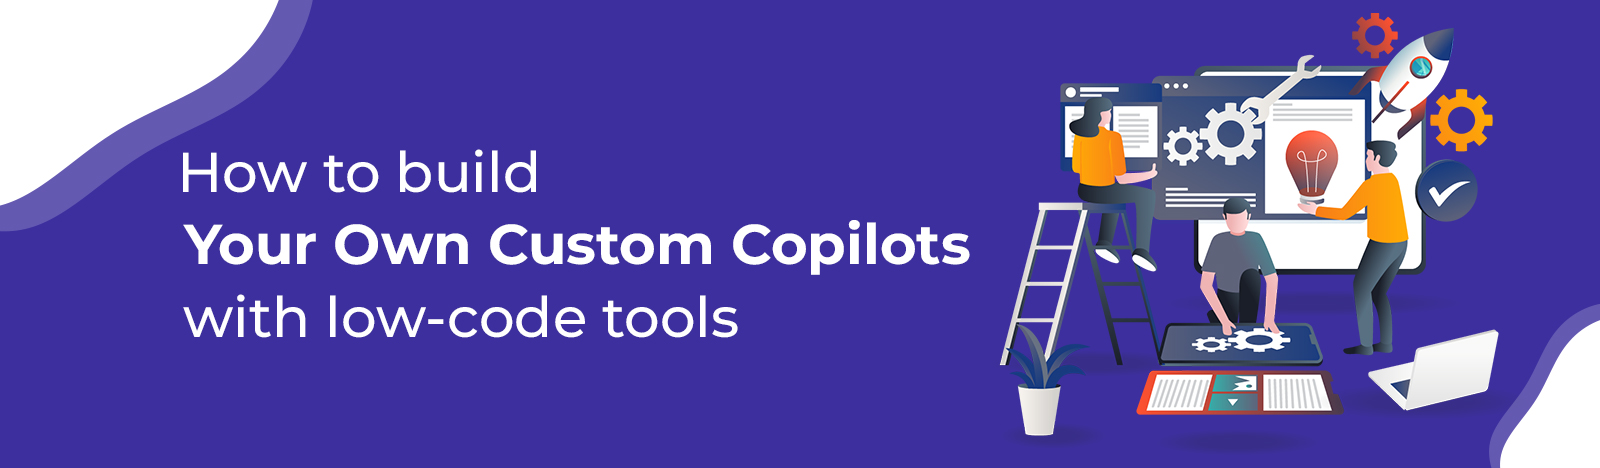 Copilot Studio: How to Build Your Own Custom Copilots with Low-Code Tools